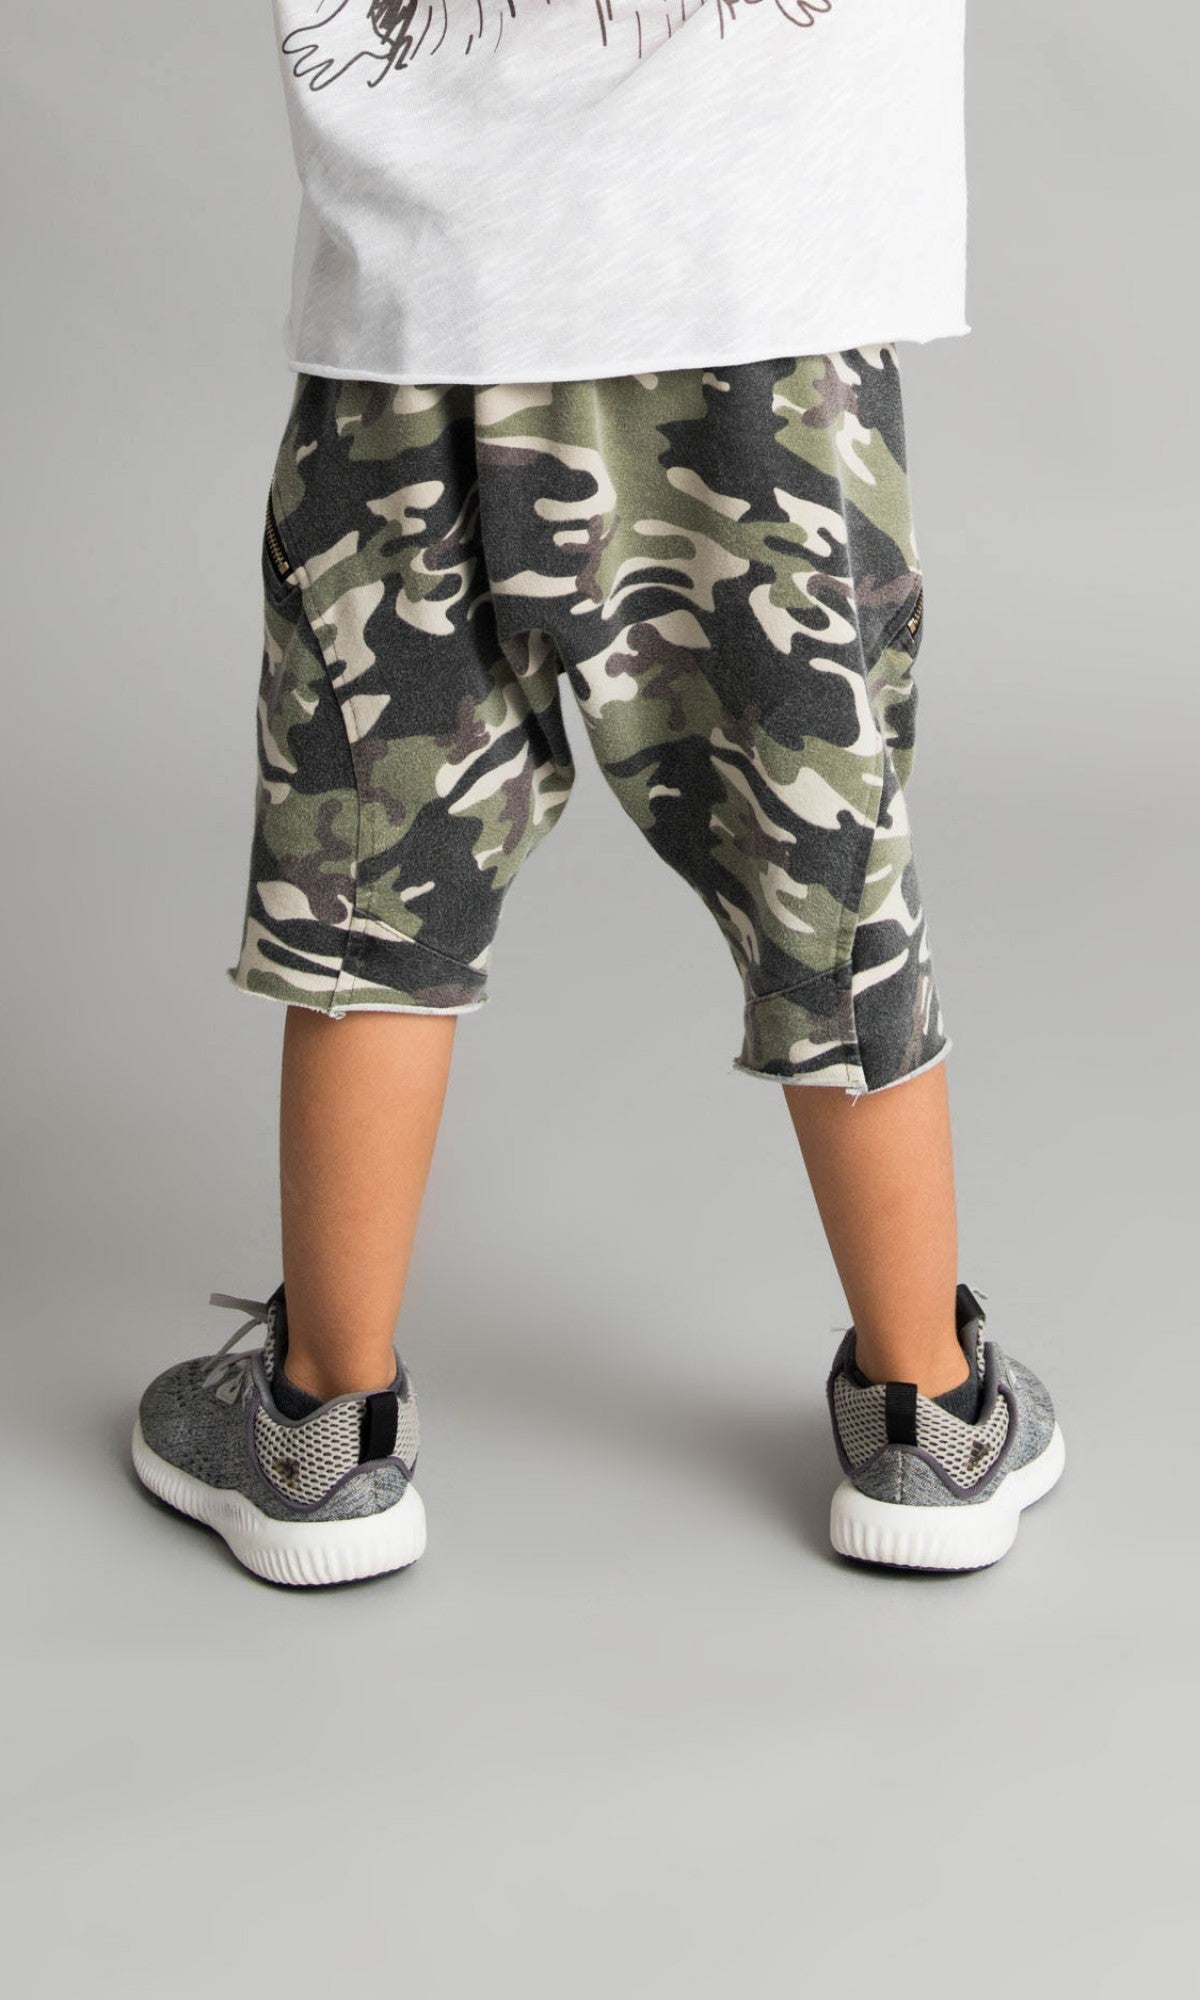 Drop Crotch Shorts with Zipper Pockets